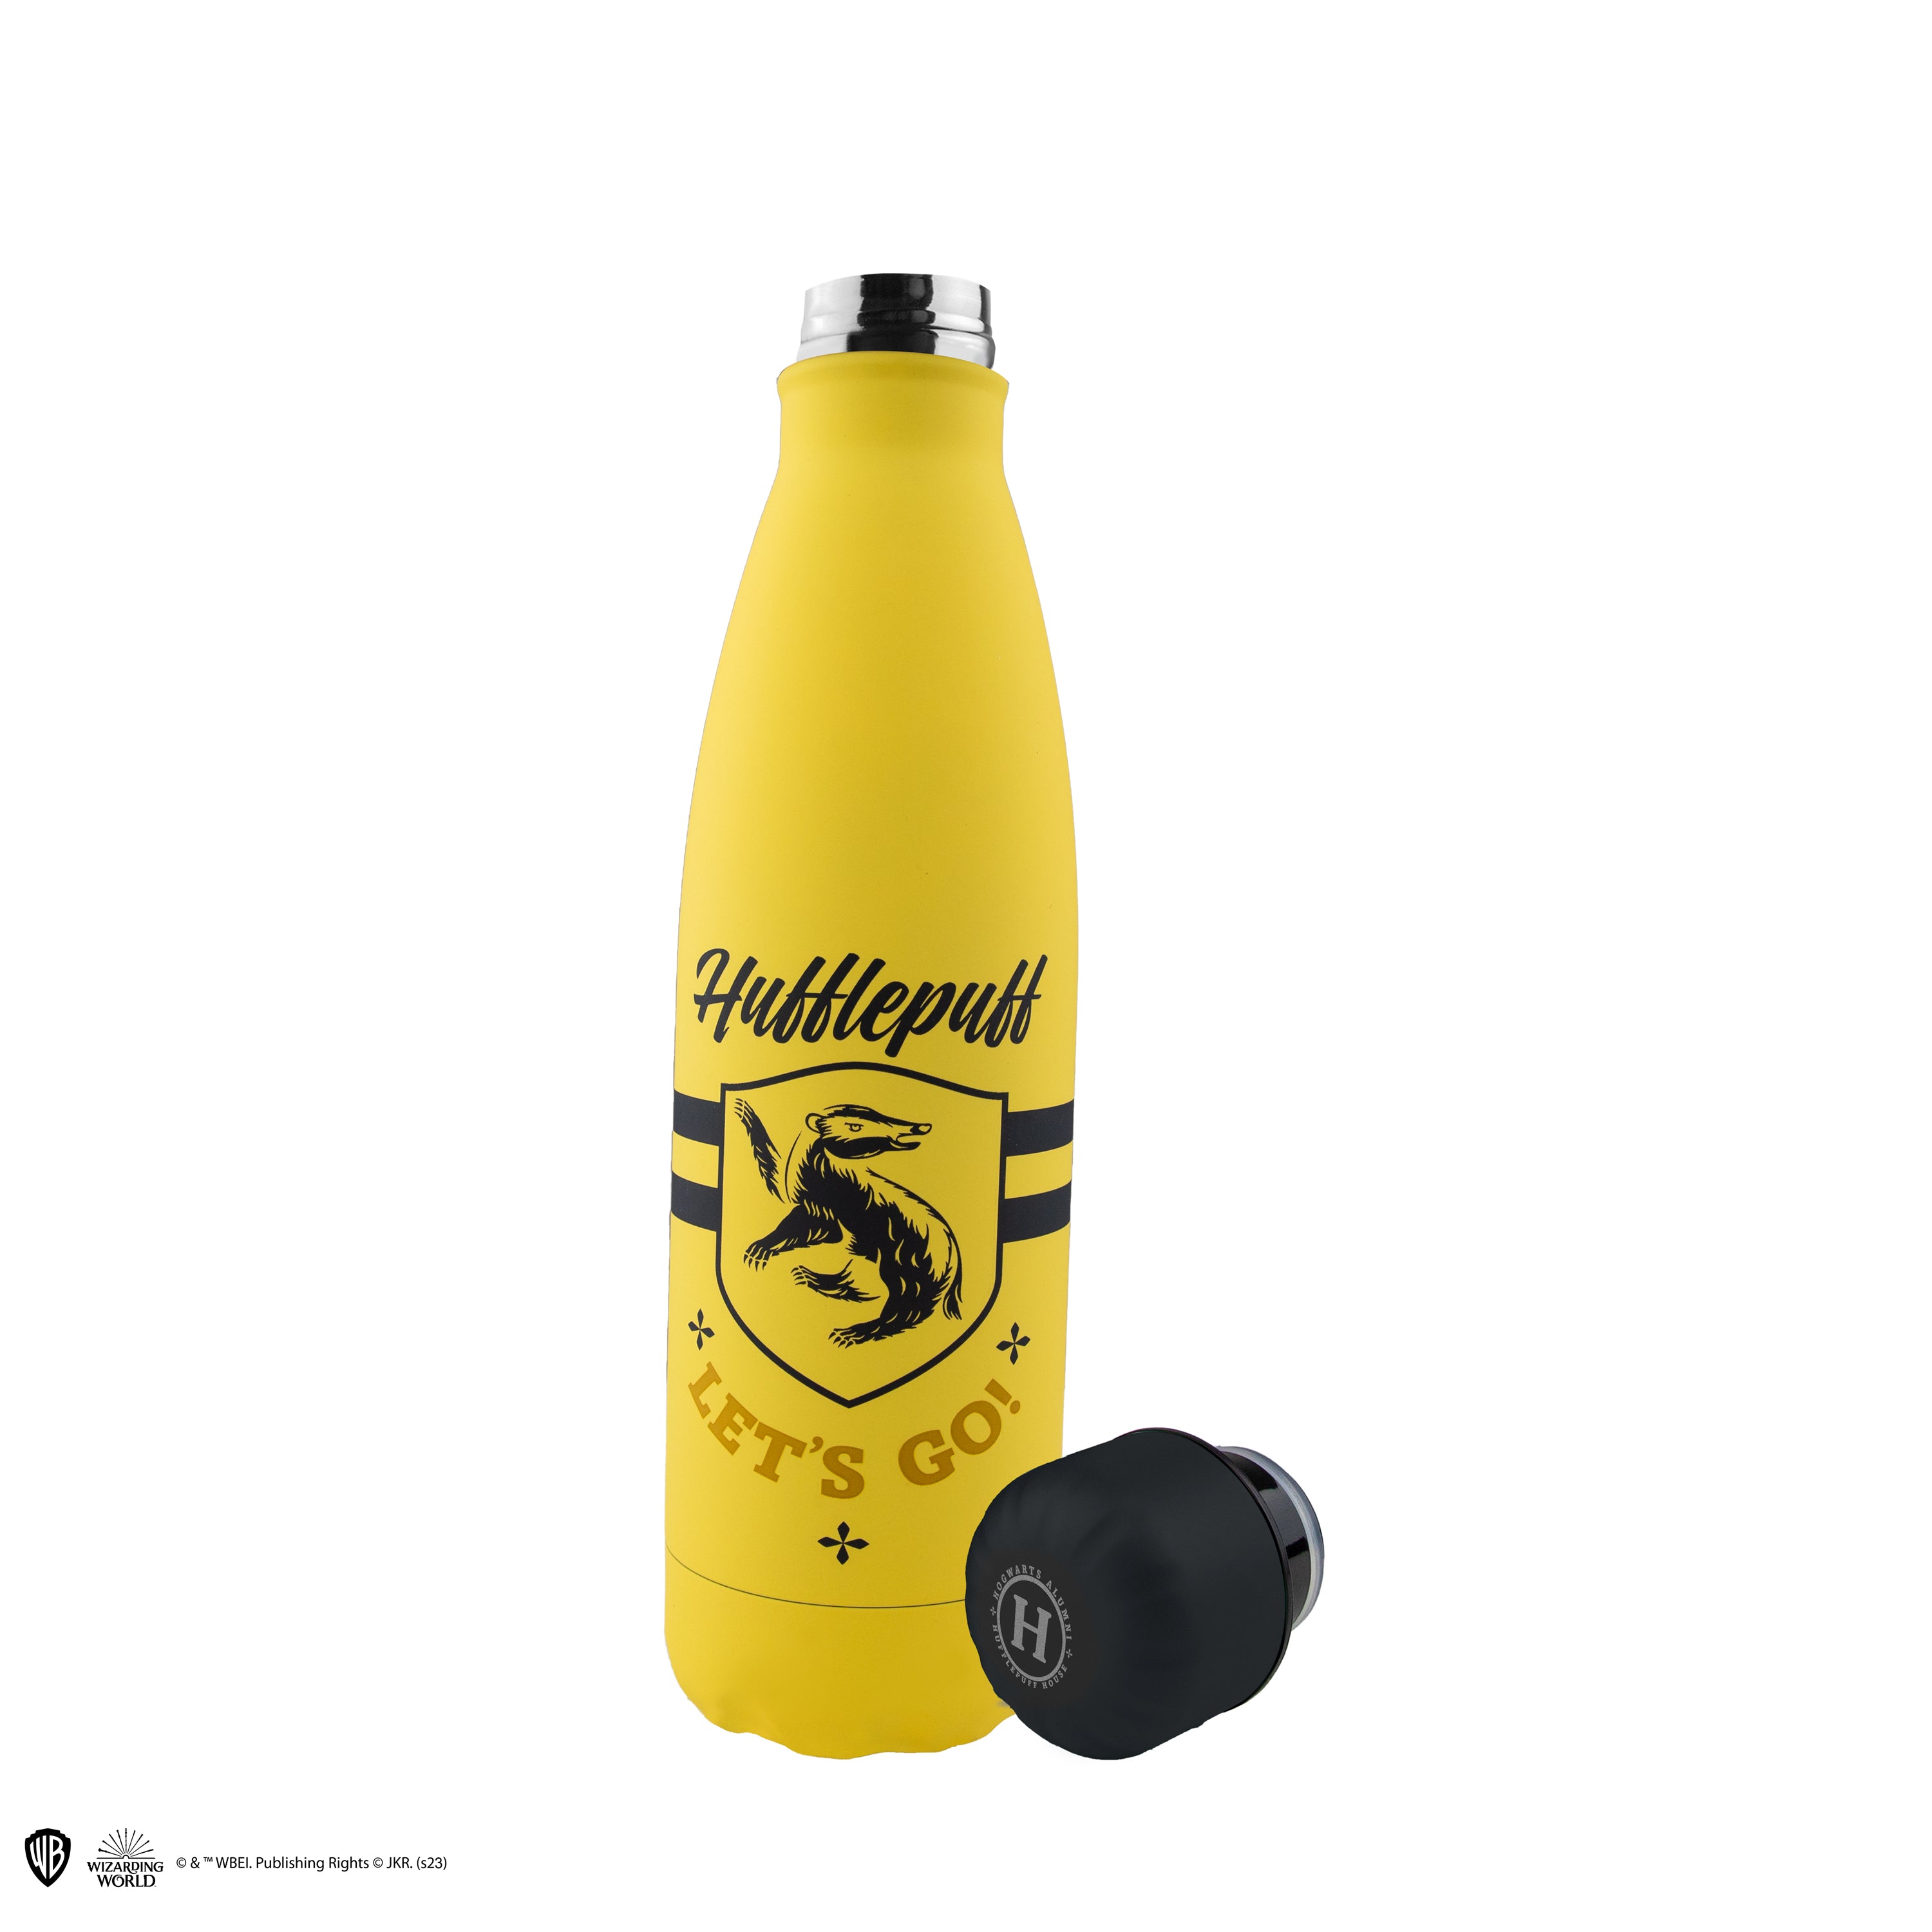 Cinereplicas Harry Potter - Water bottle Gryffindor  